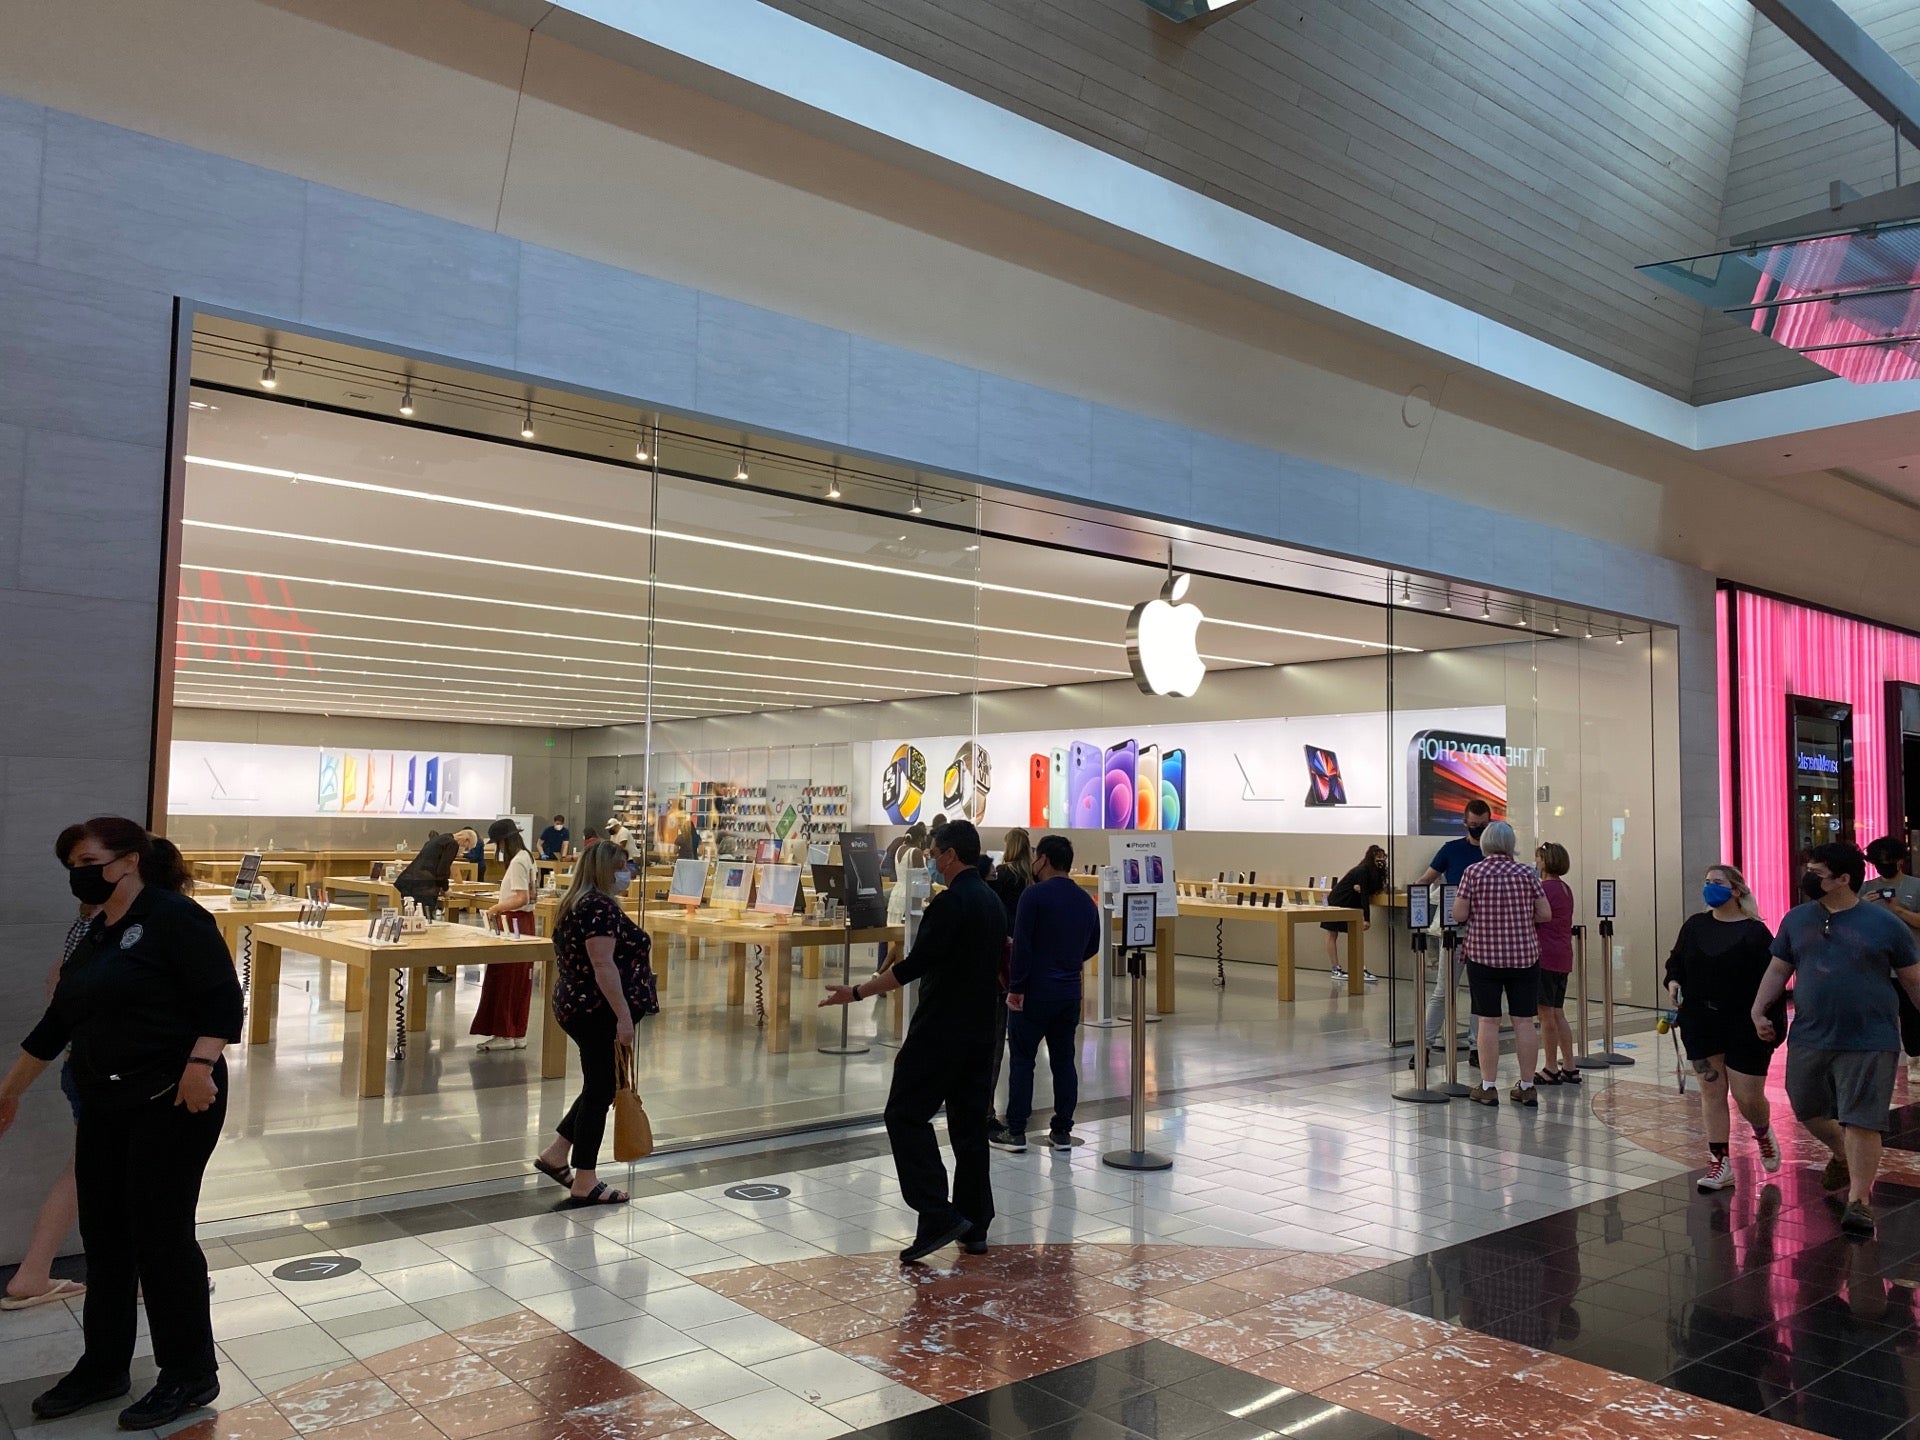 Washington Square - Apple Store - Apple